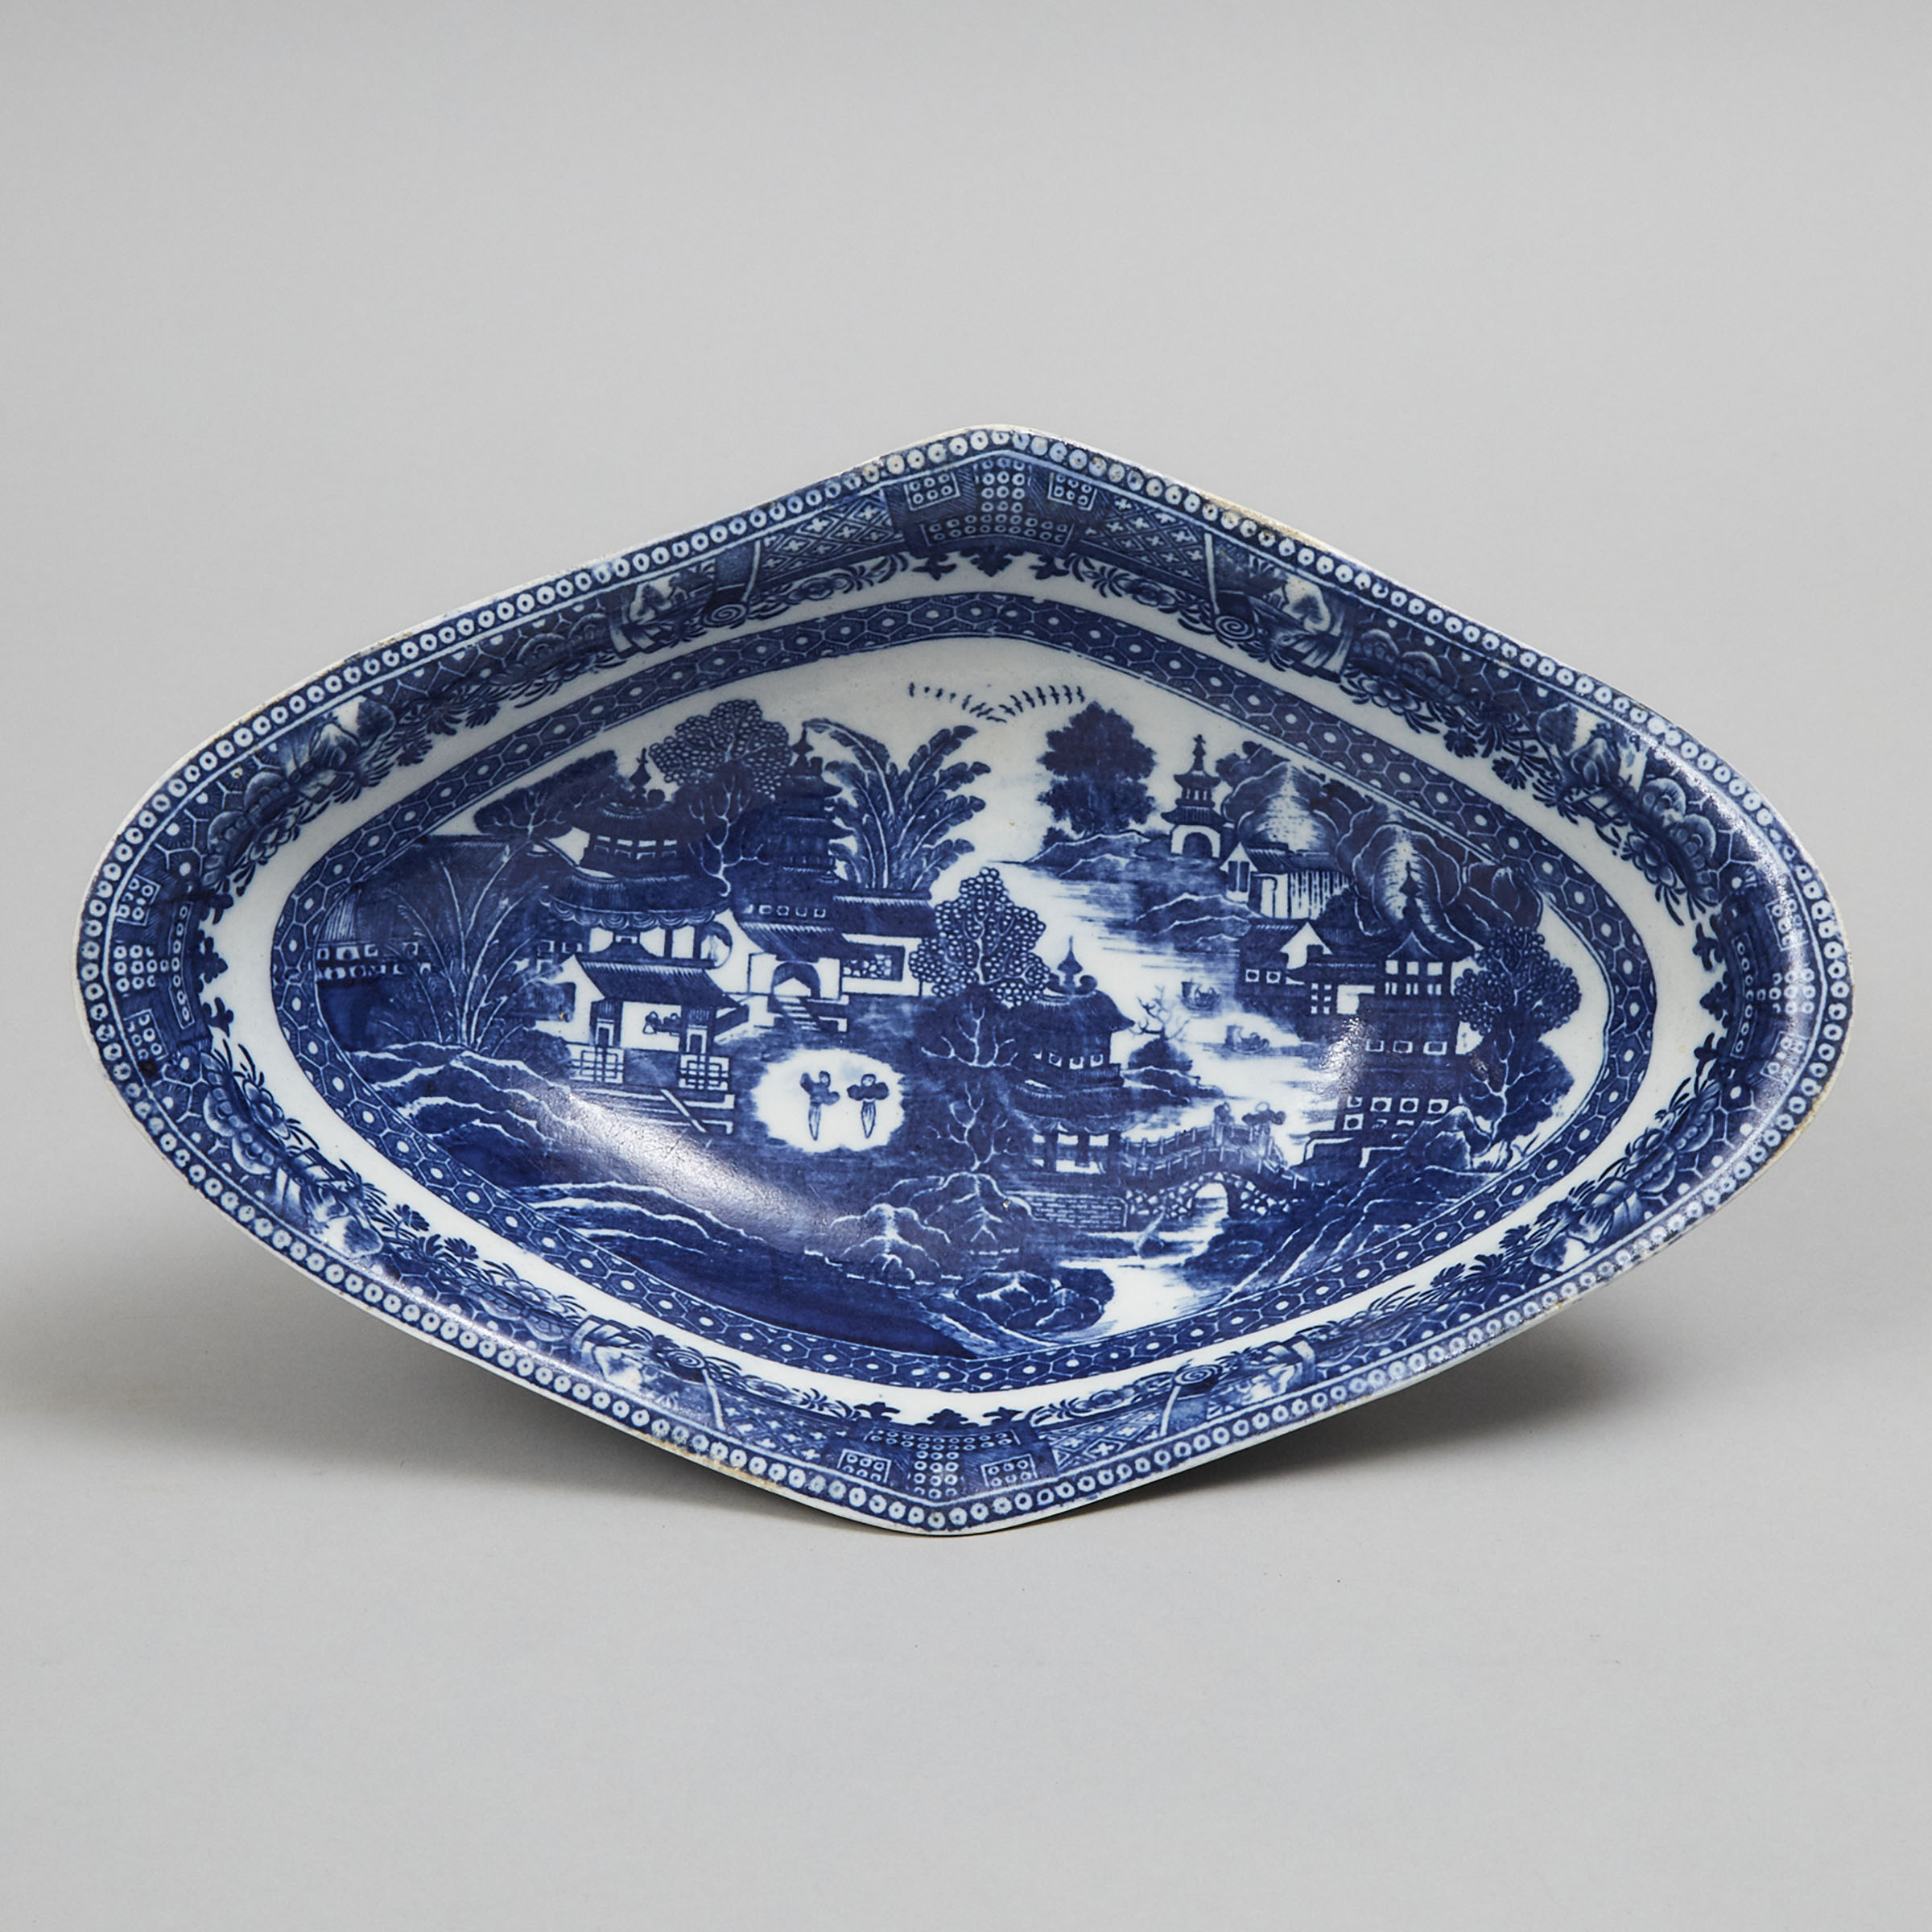 Caughley Blue-Printed 'Conversation' Lozenge Shaped Dish, c.1780